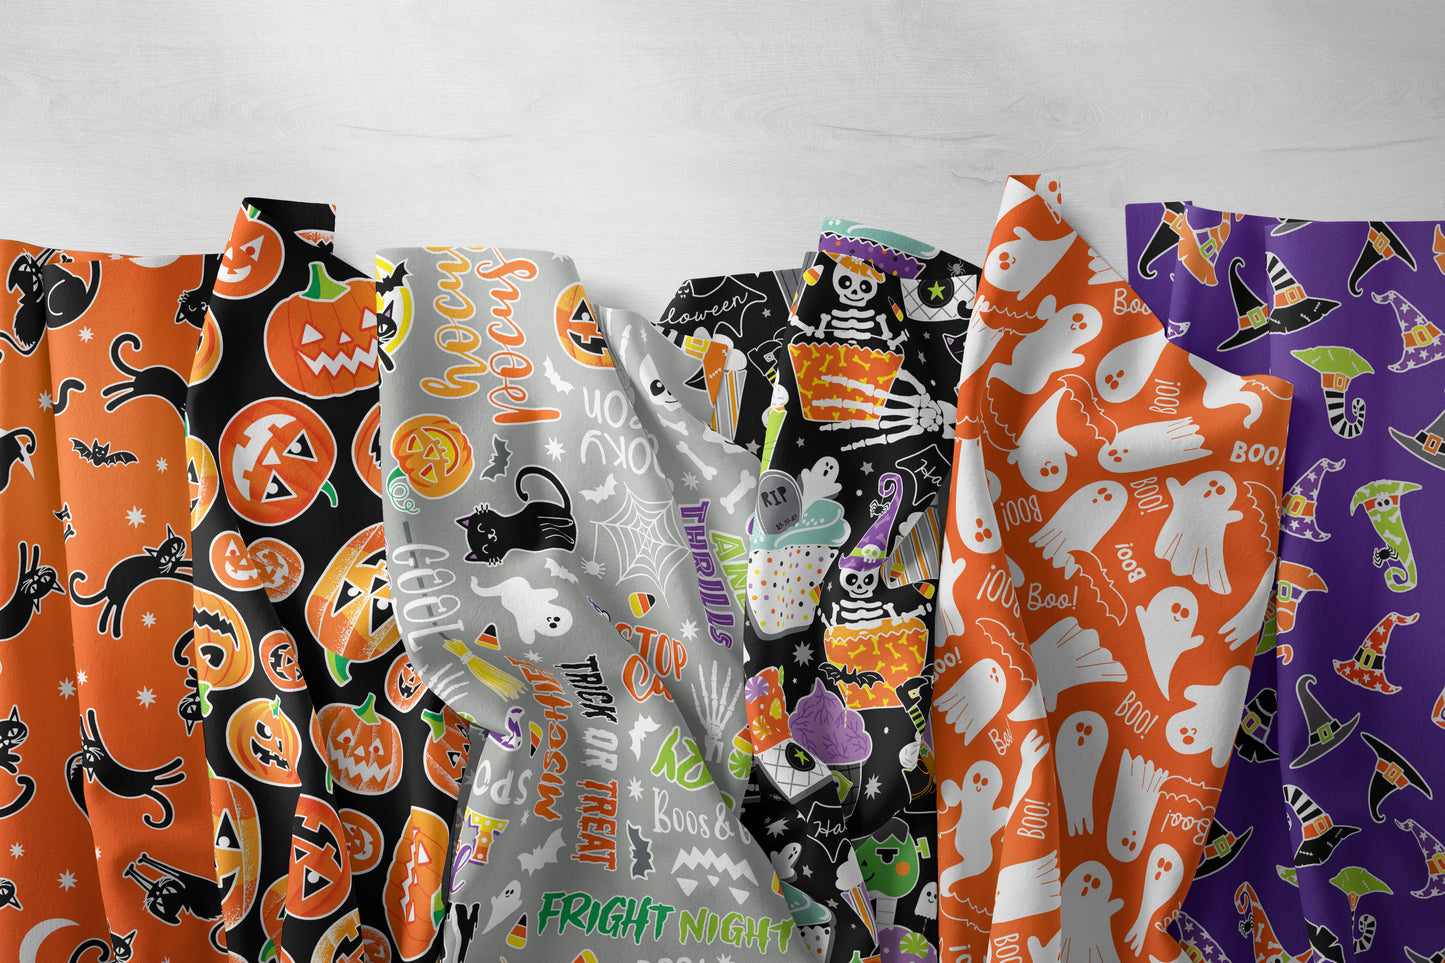 Halloween Treats on Black  -  Chills & Thrills Cupcake Cotton Fabric by the Yard